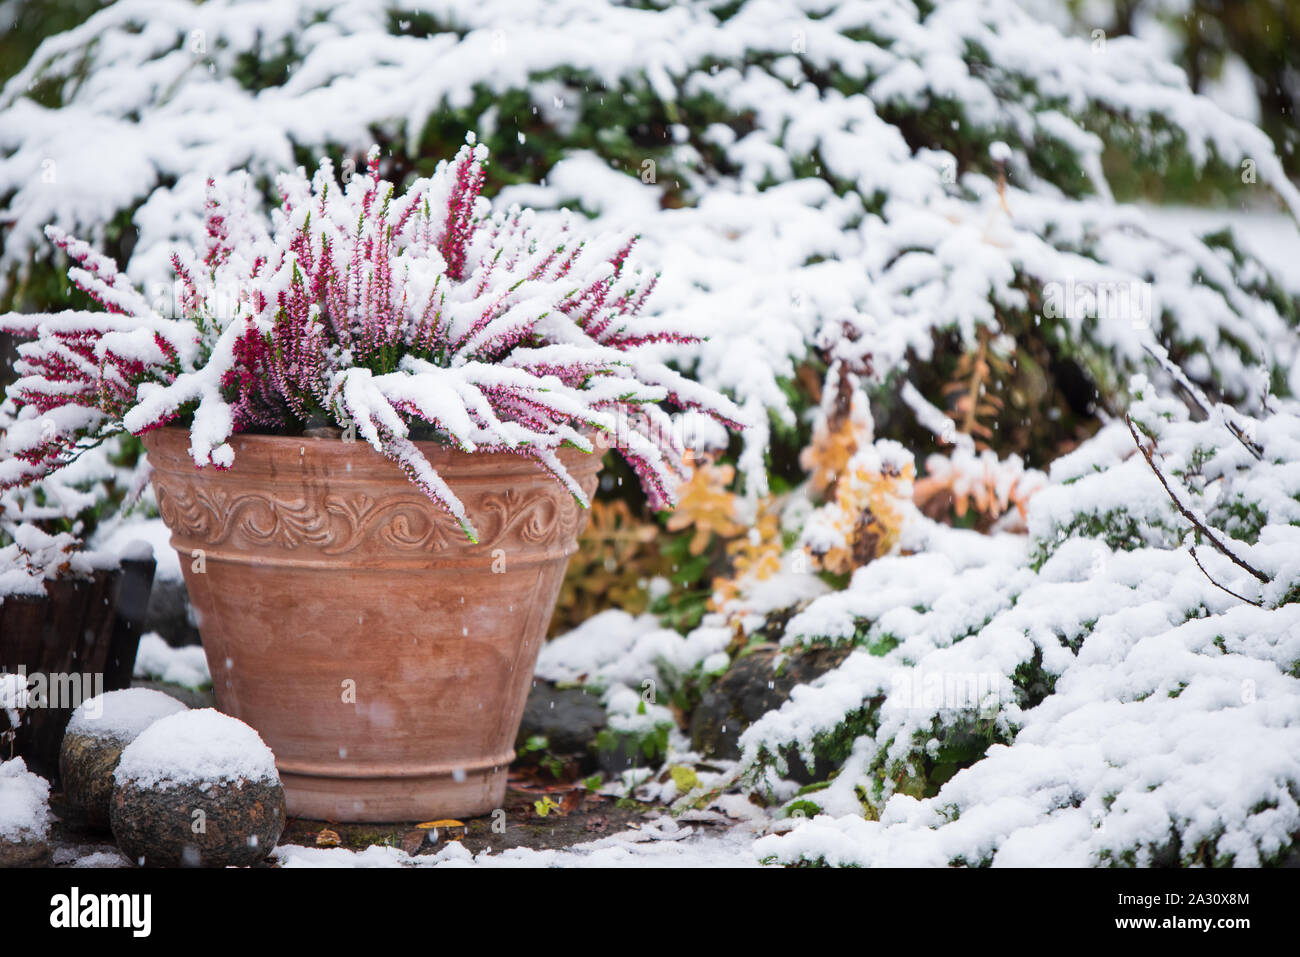 Common heather, Calluna vulgaris, in flower pot covered with snow, evergreen juniper in the background, snowy garden in winter Stock Photo